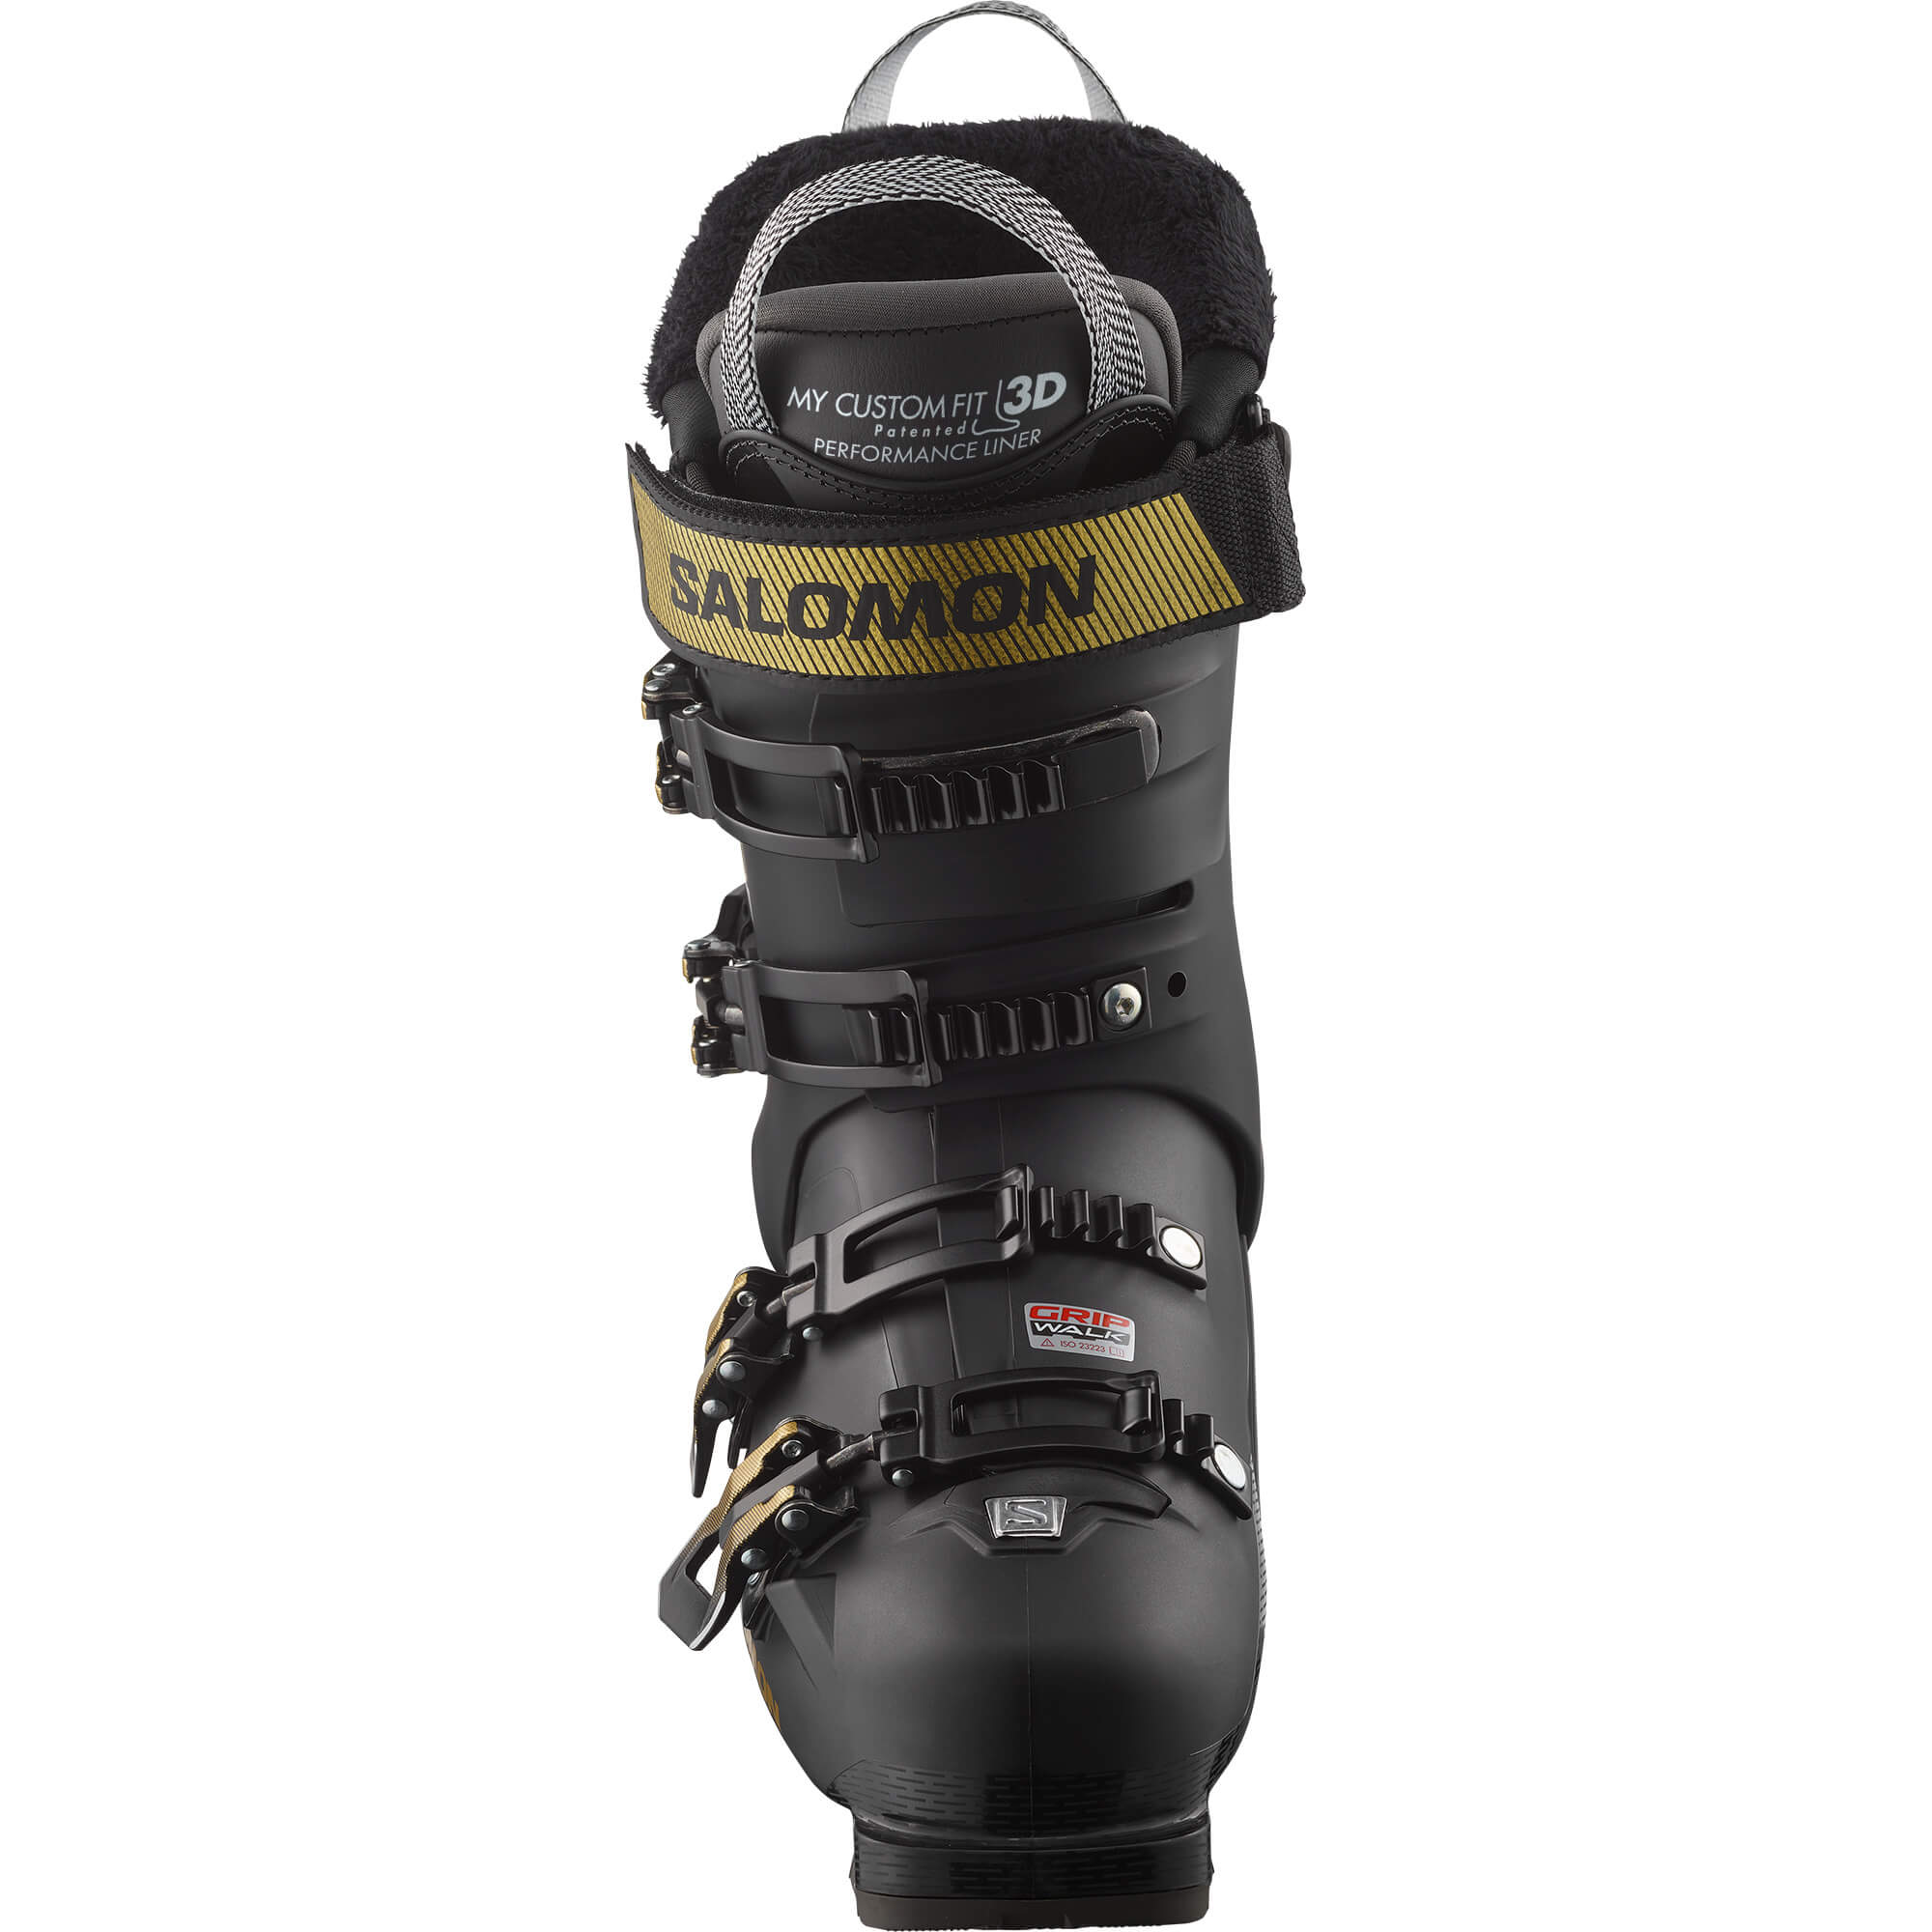 Salomon S/PRO MV 90 W GW Women's GripWalk Ski Boots